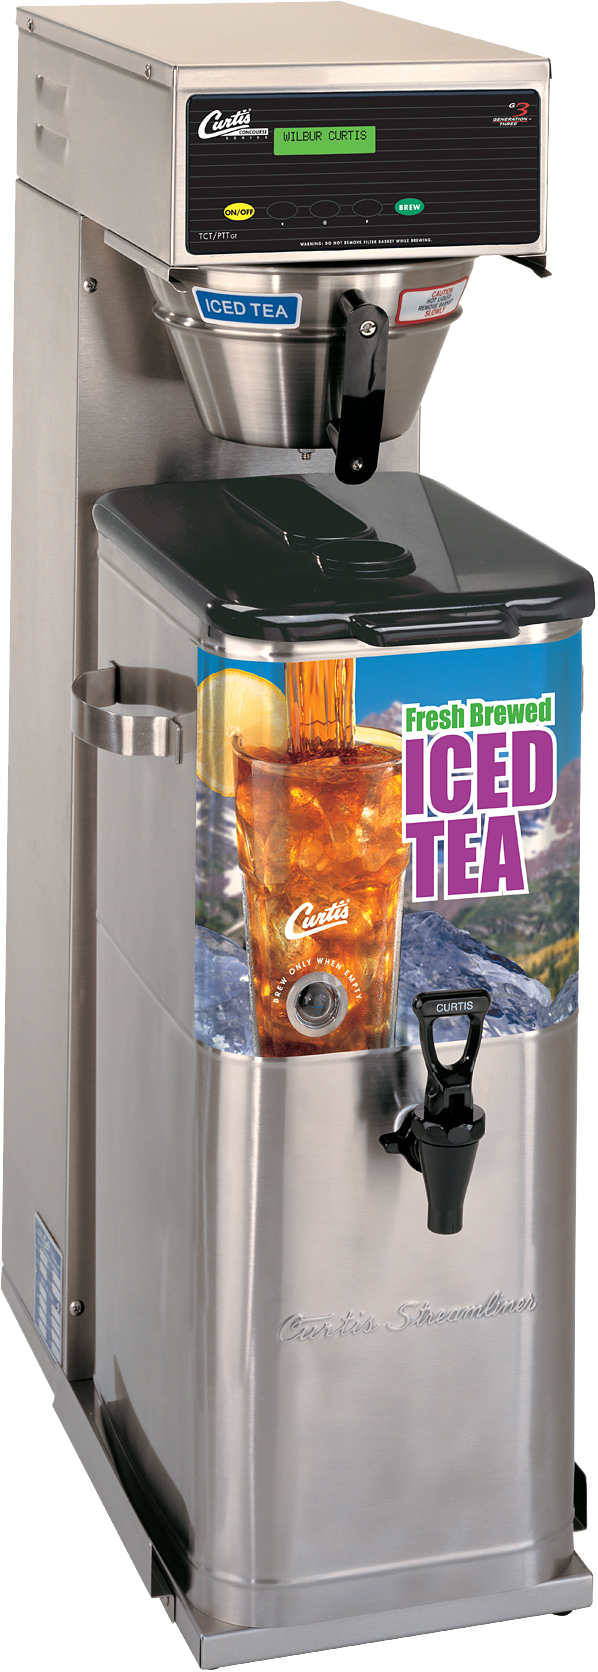 Curtis Iced Tea Dispensers